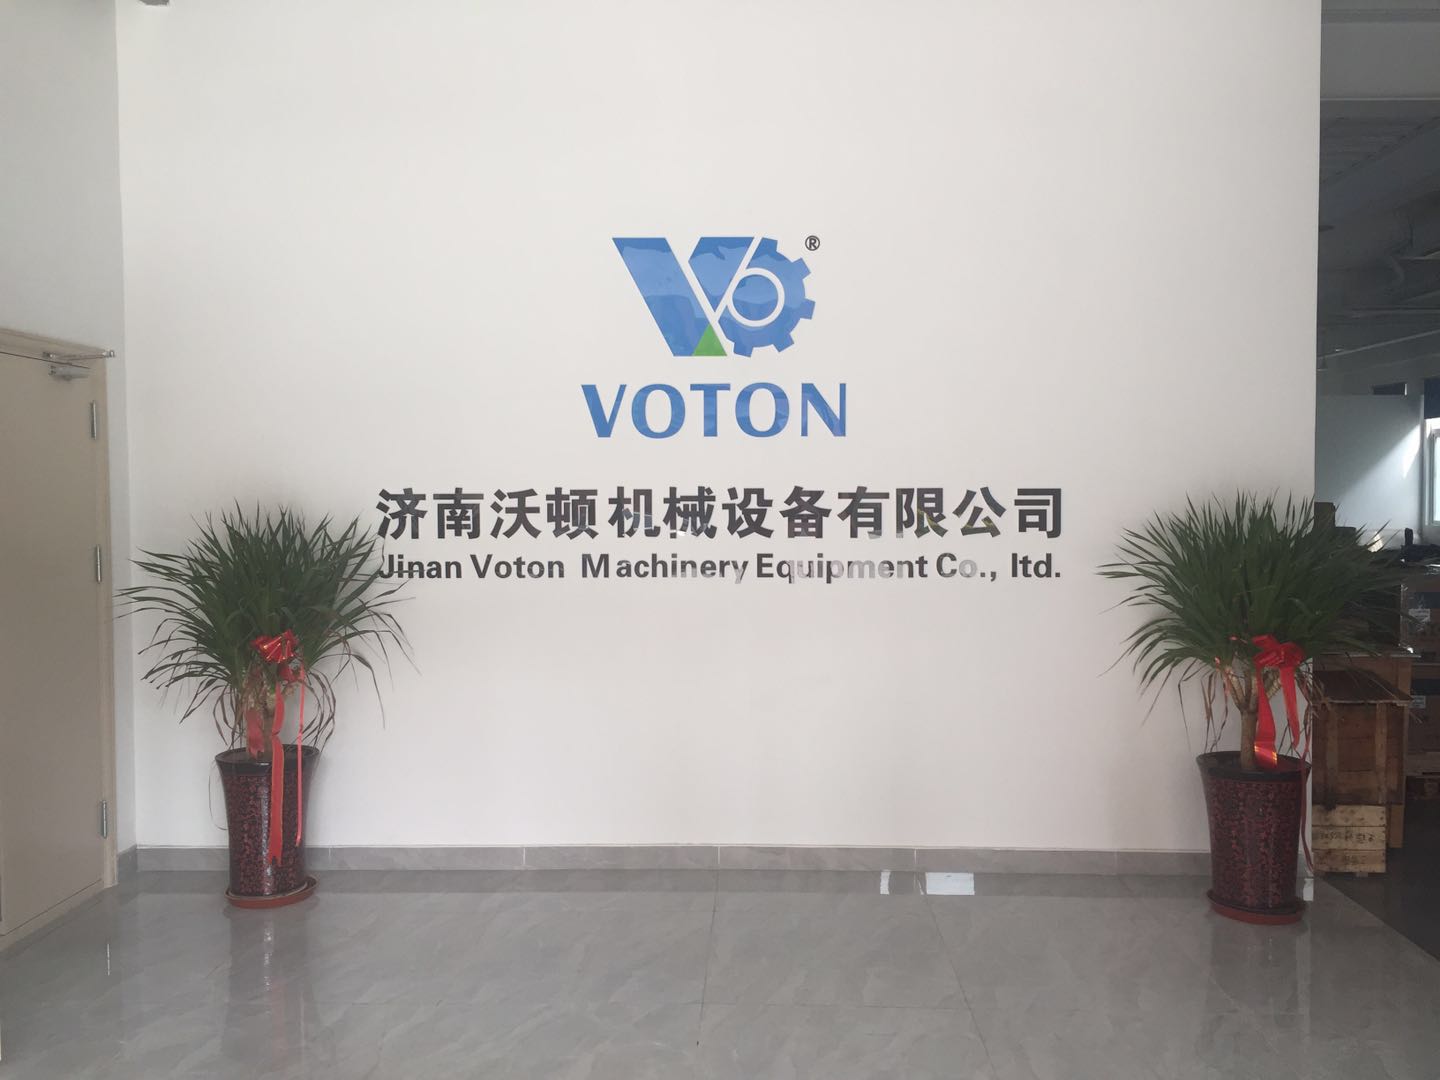 Jinan Voton Machinery Equipment Co., Ltd